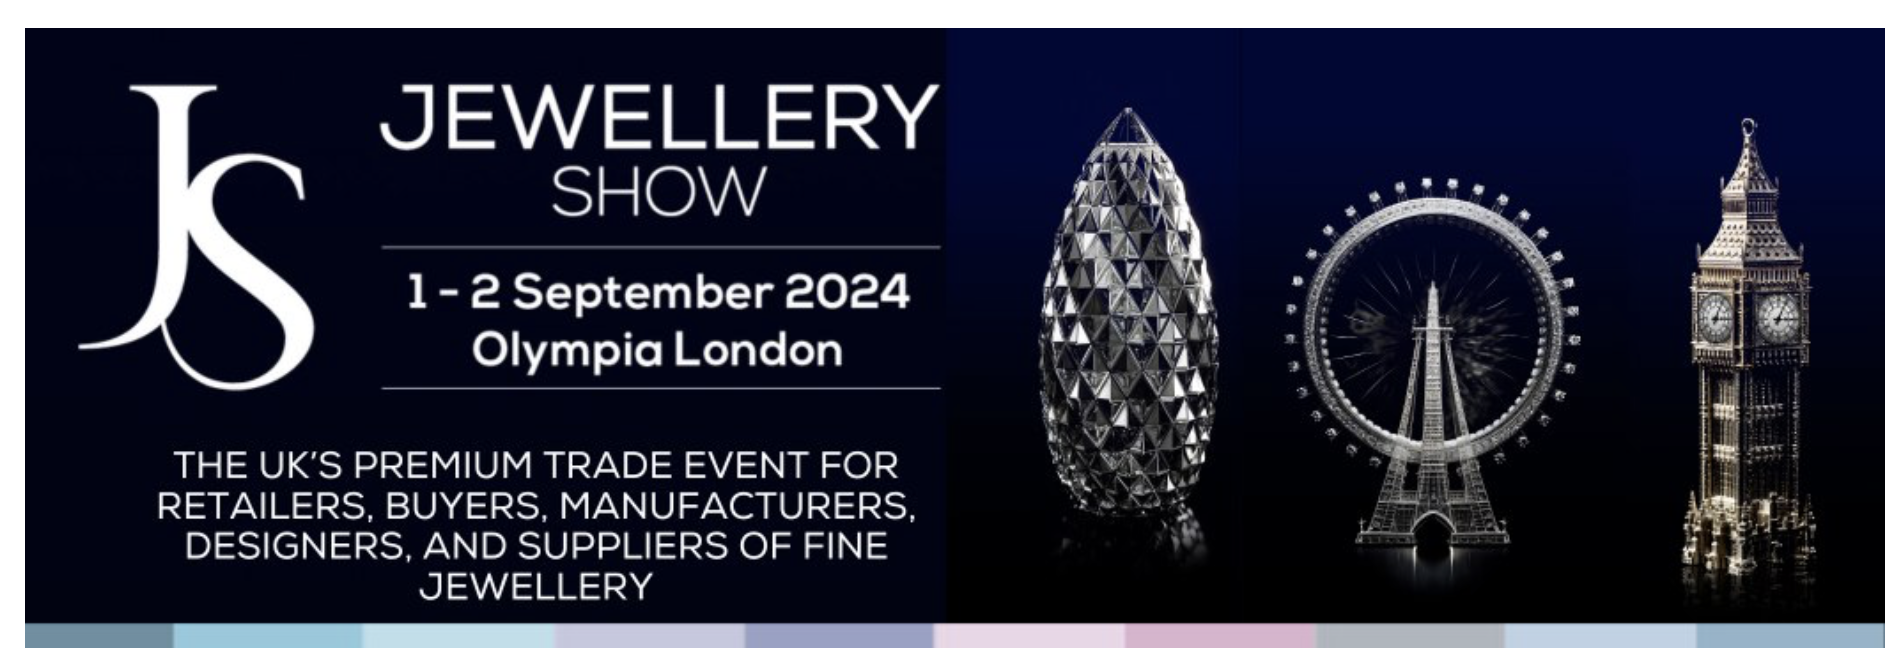 The Jewellery Show, London